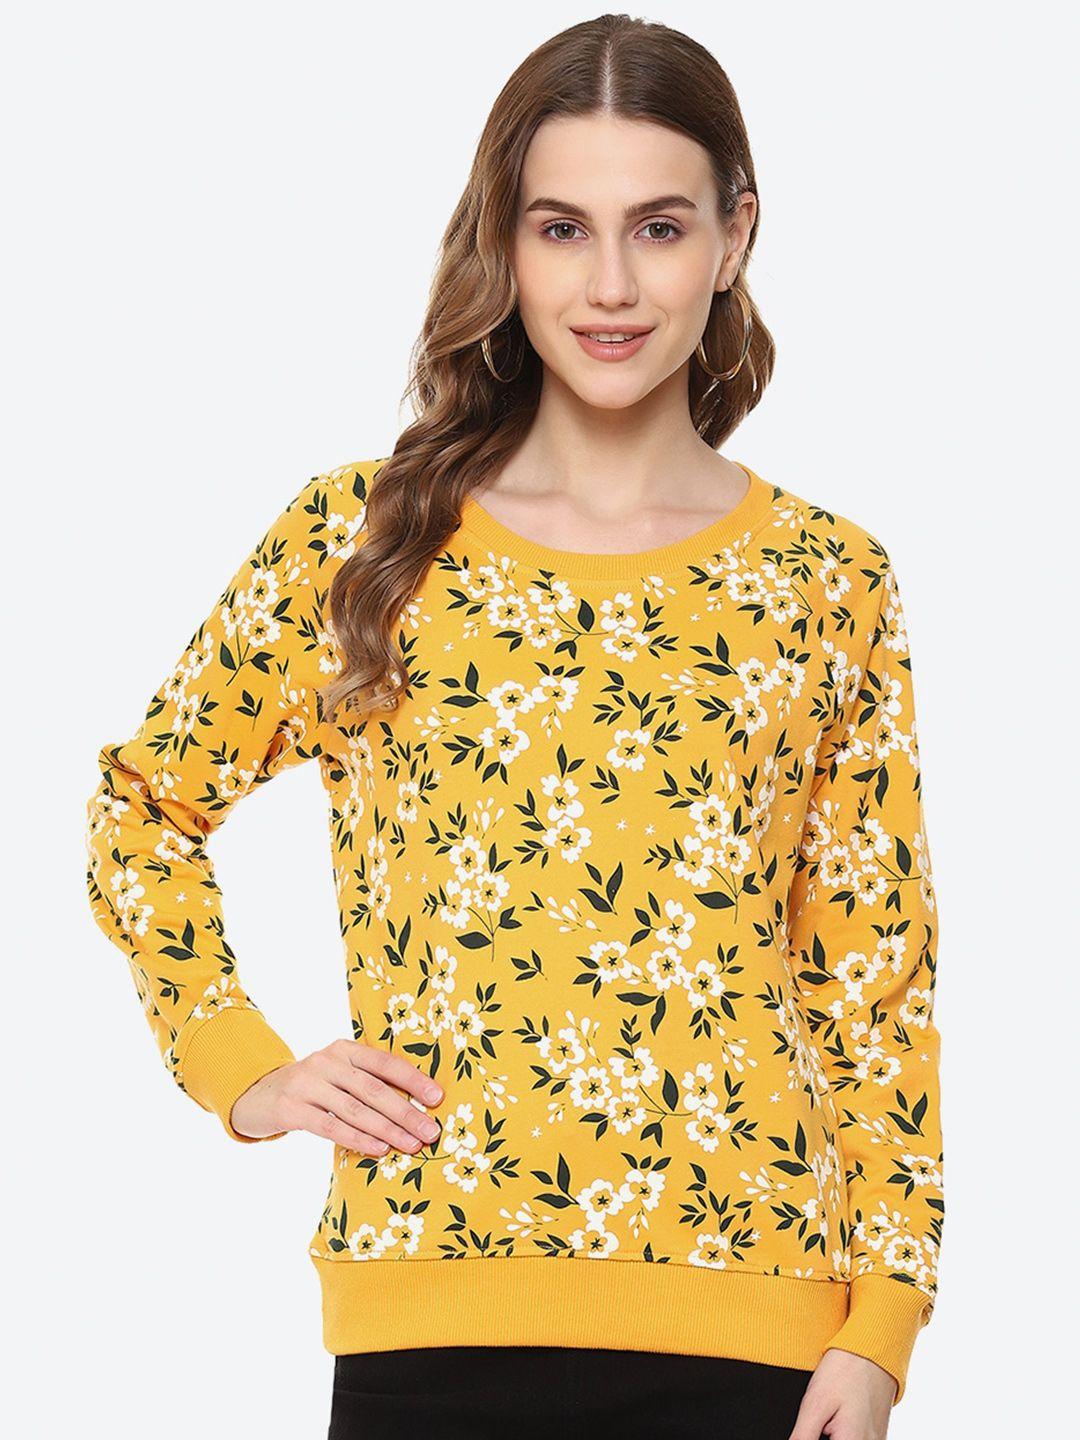 2bme-floral-printed-cotton-pullover-sweatshirt